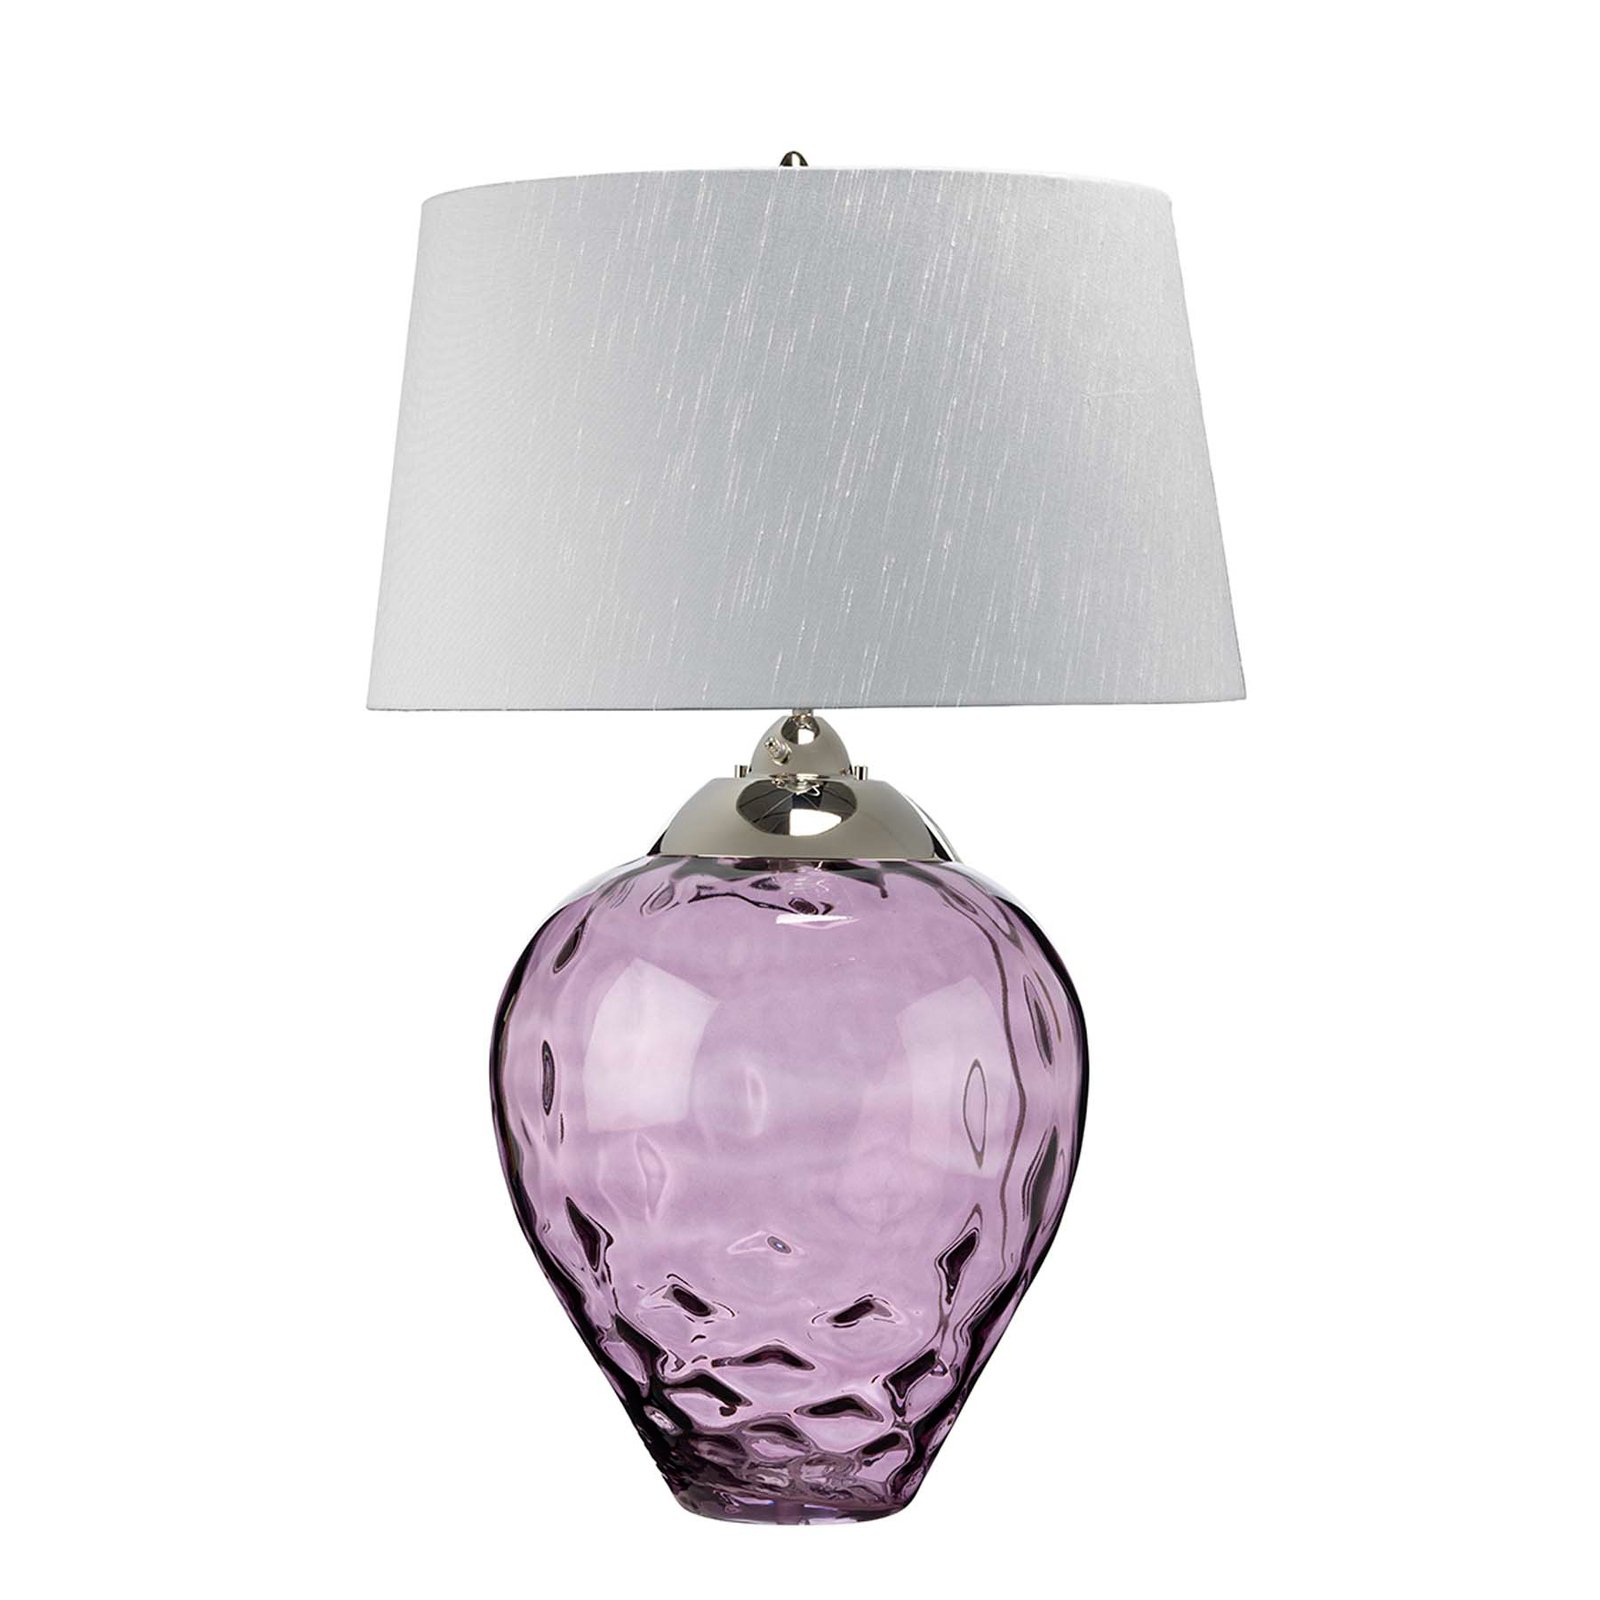 Samara table lamp, Ø 51 cm, pink, fabric, glass, 2-bulb